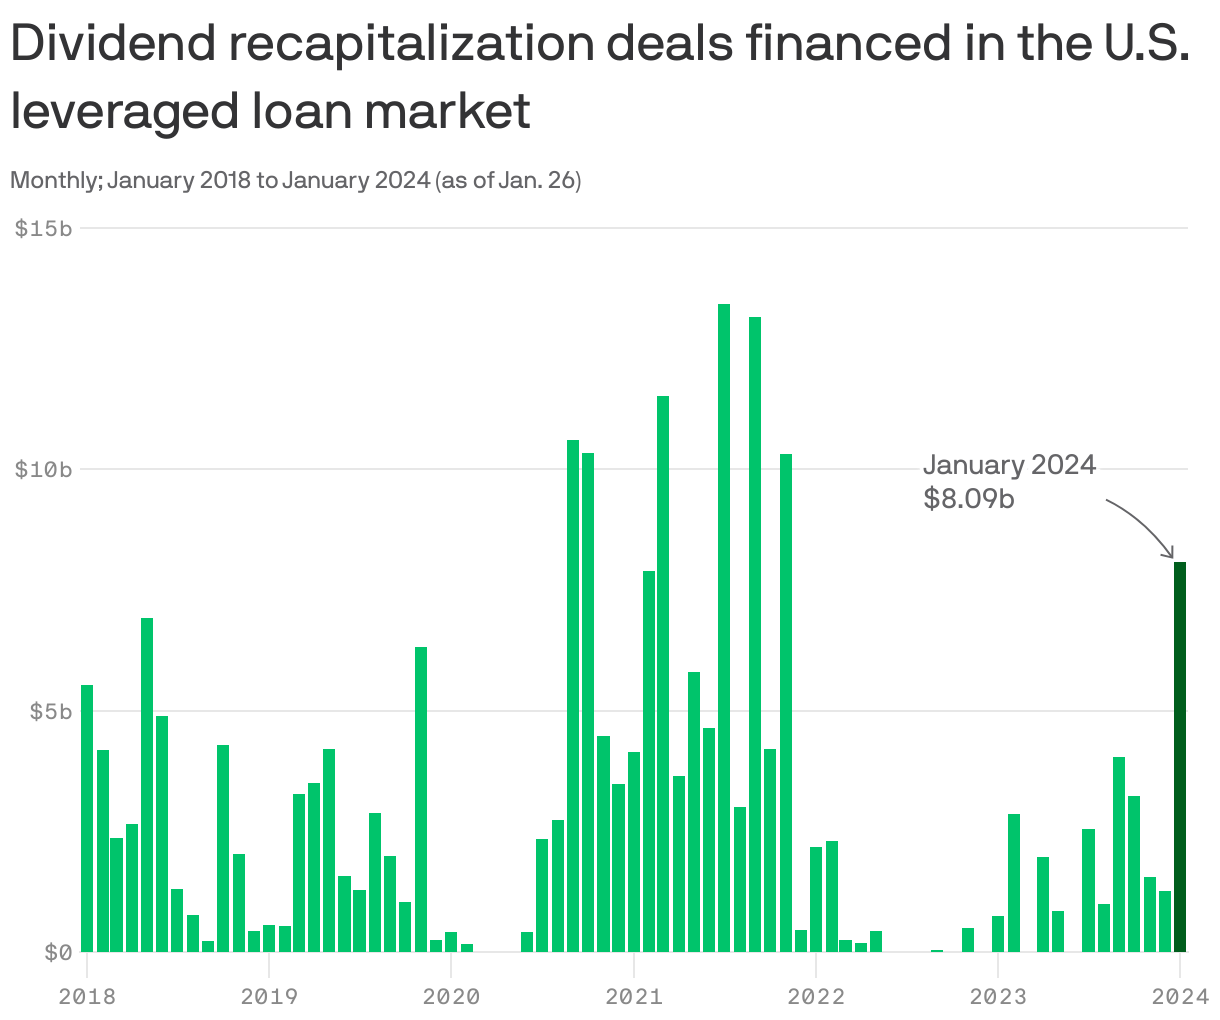 Dividend recapitalization deals financed in the U.S. leveraged loan market